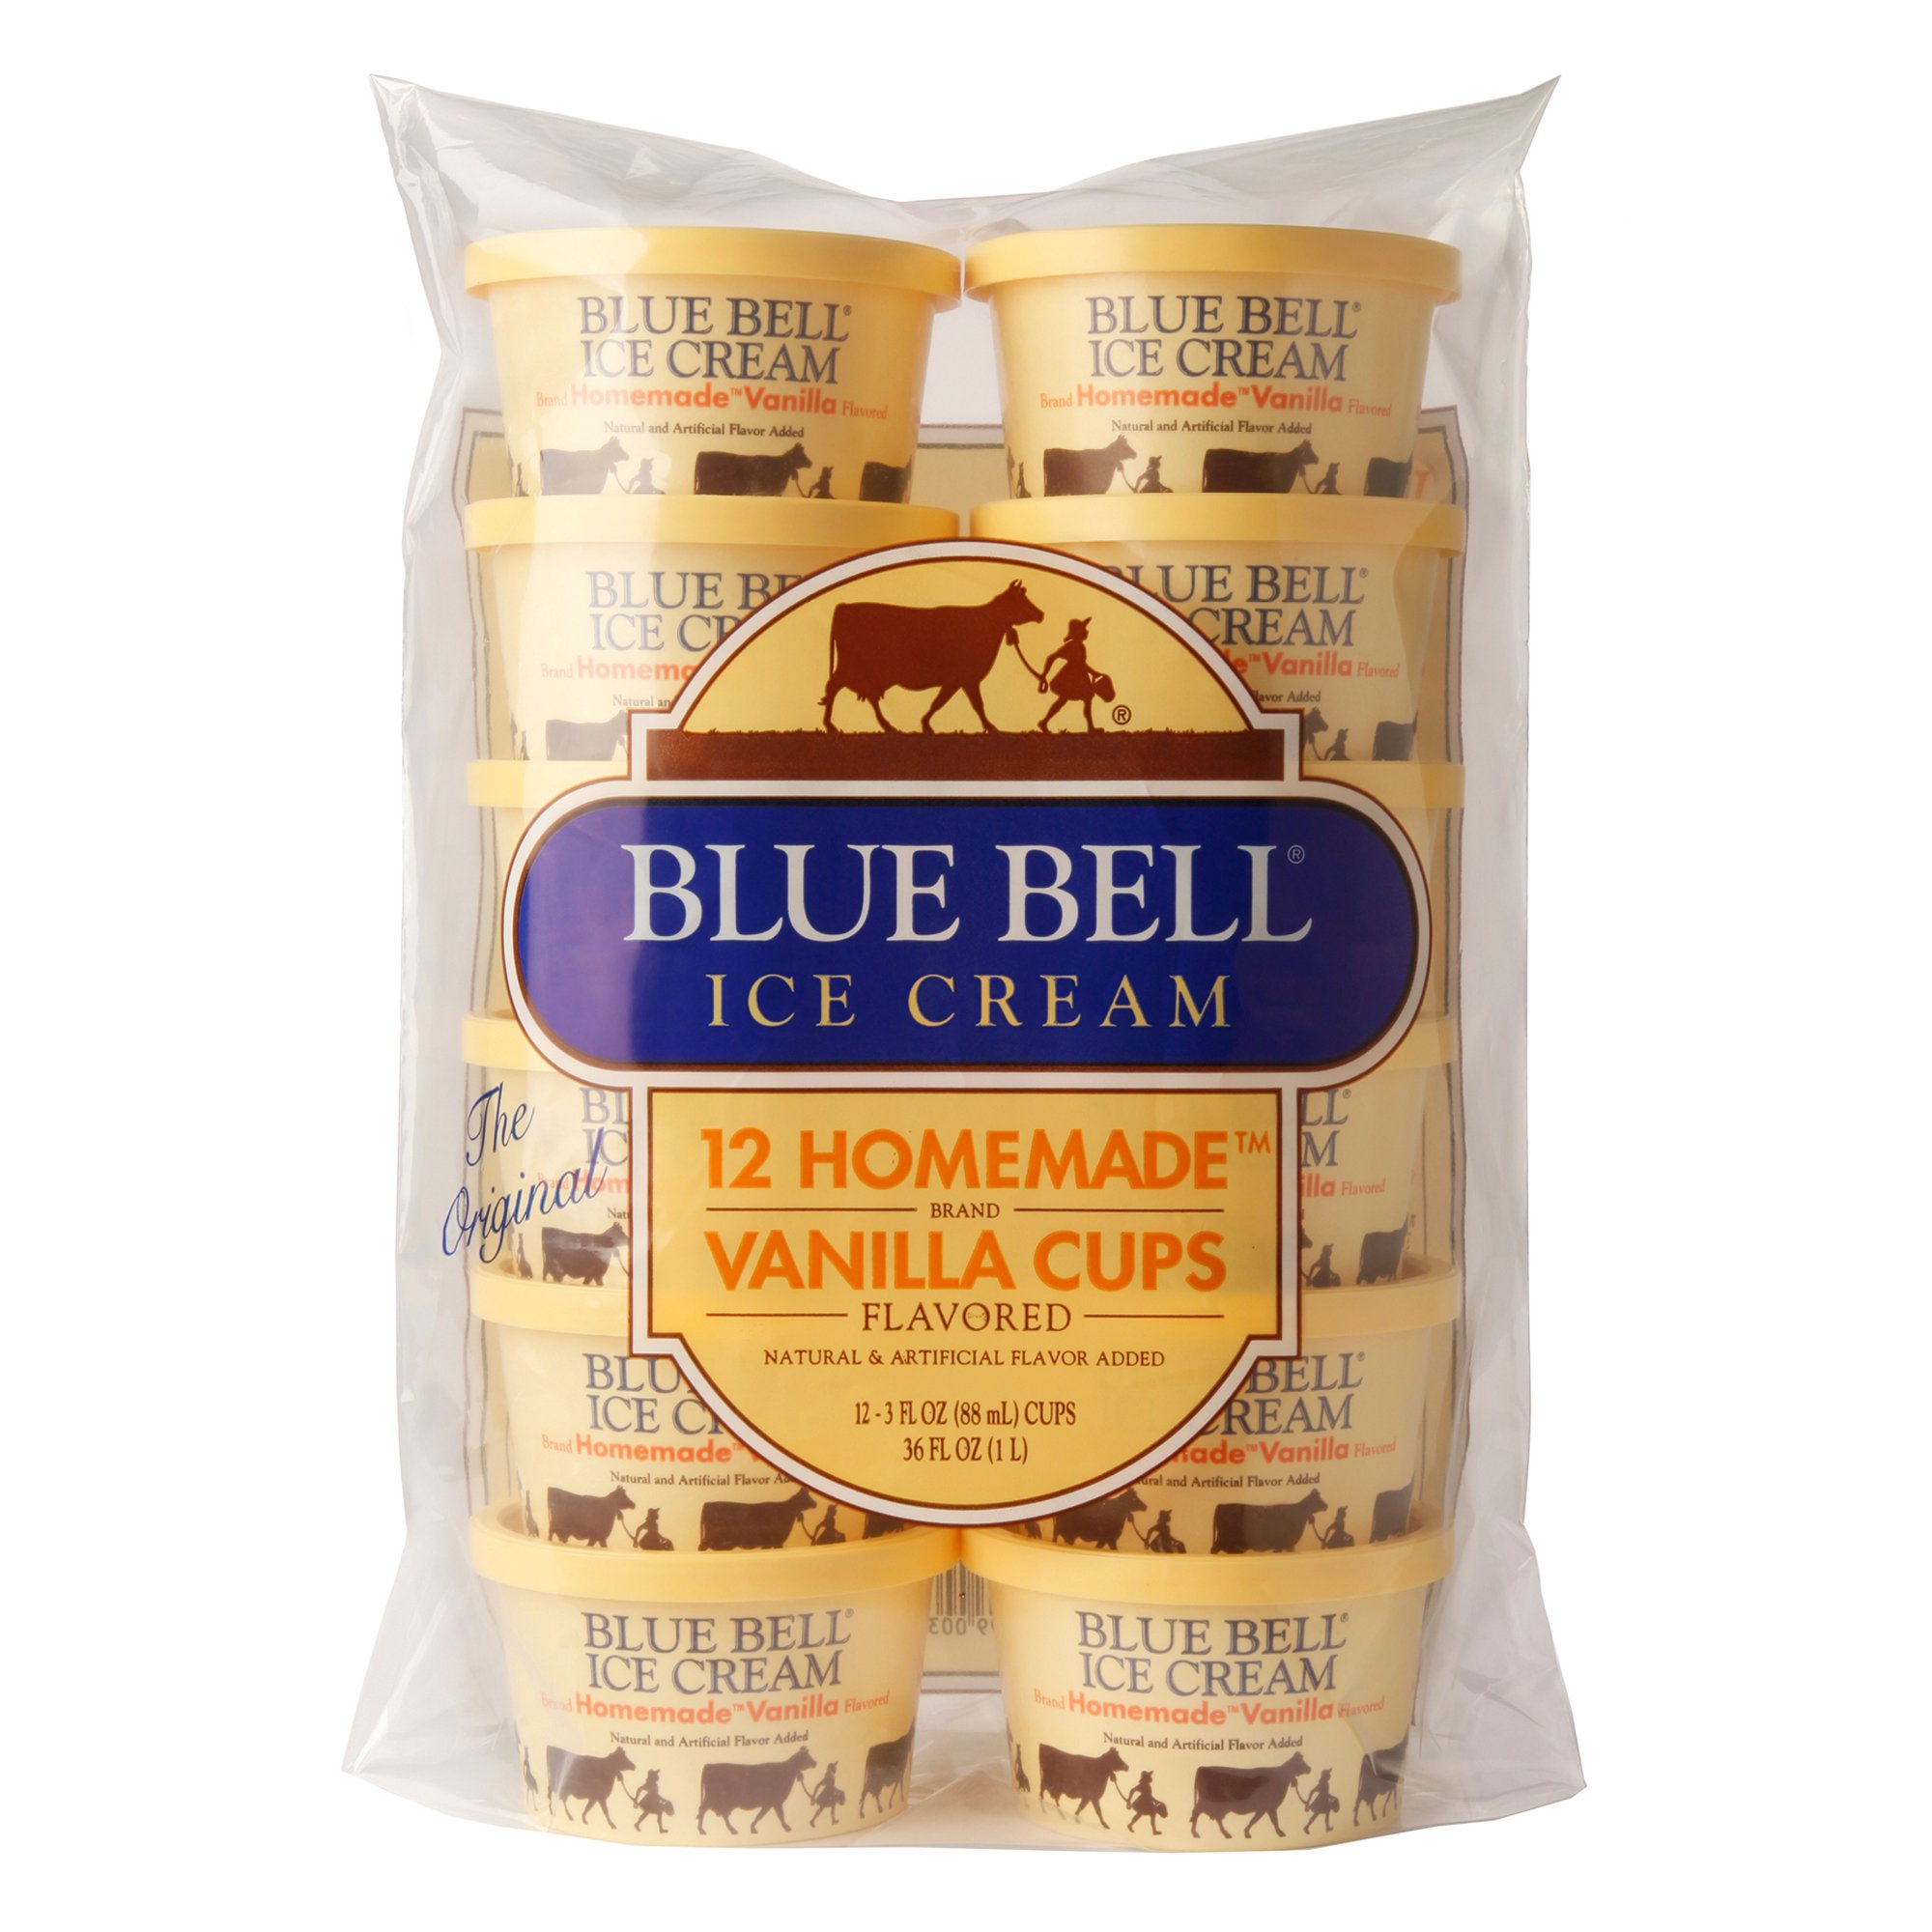 Blue Bell Homemade Vanilla Ice Cream Cups Shop Ice Cream at HEB